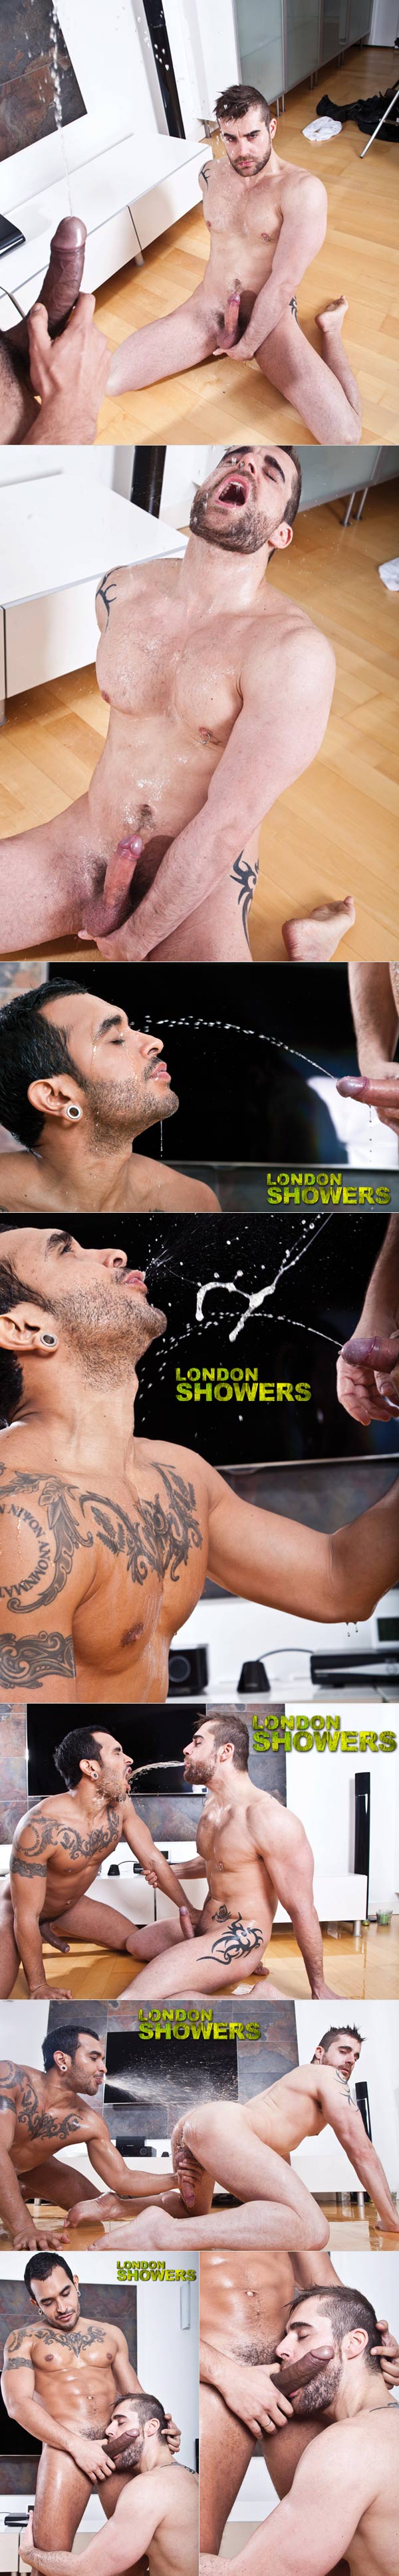 London Showers (Lucio Saints Dominates Ethan Rezzo) at LucasEntertainment.com